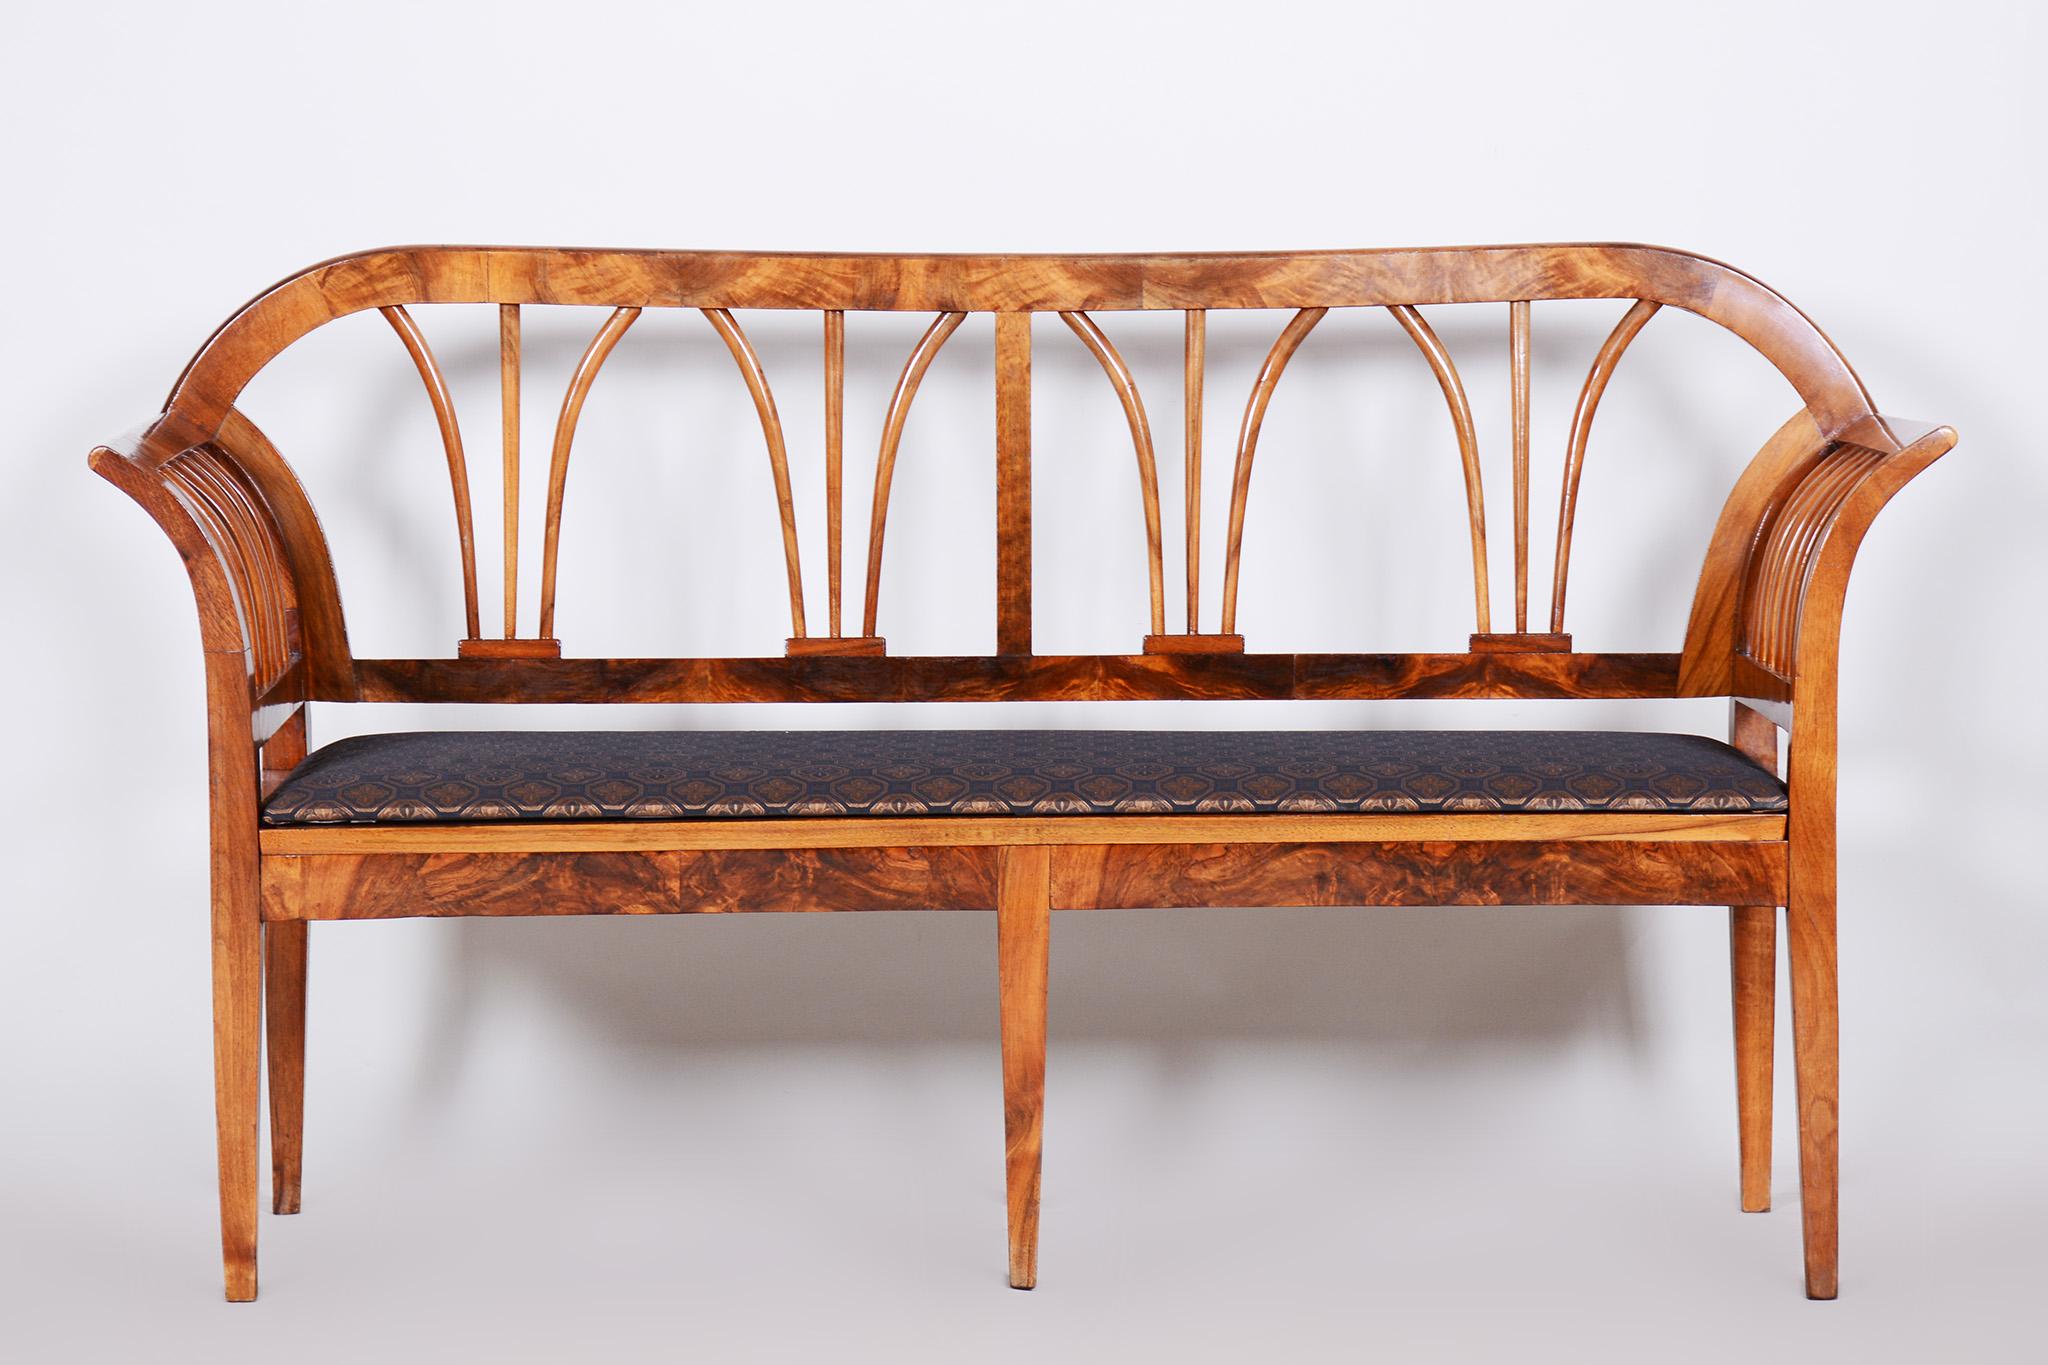 Early 19th Century Restored Biedermeier Walnut Sofa, New Upholstery, Rattan Strings, Austria, 1820s For Sale